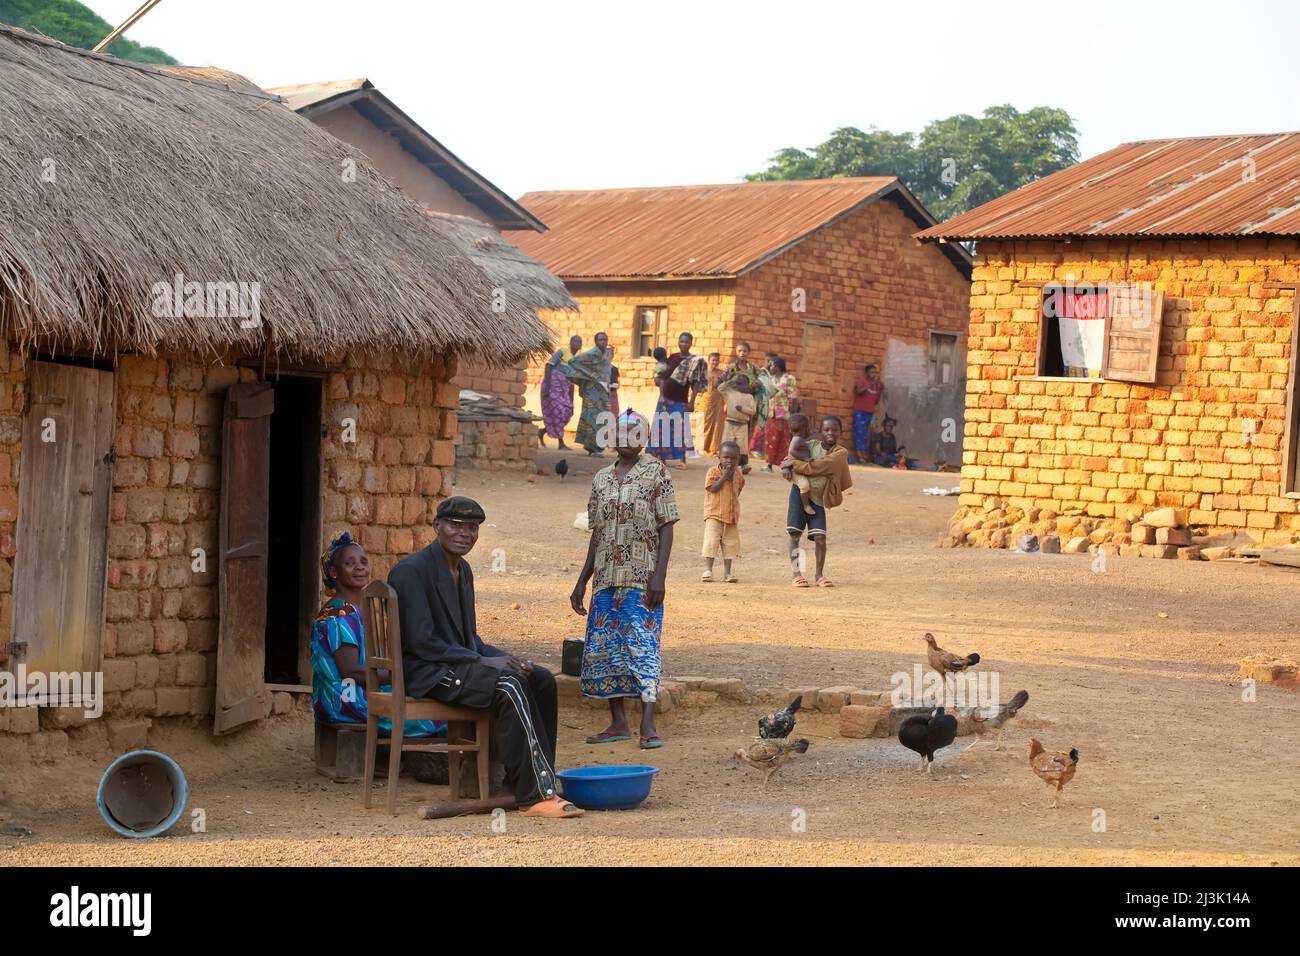 Locals of the small village Bulu greet the photographer.; Bulu, Democratic Republic of the Congo. Stock Photo